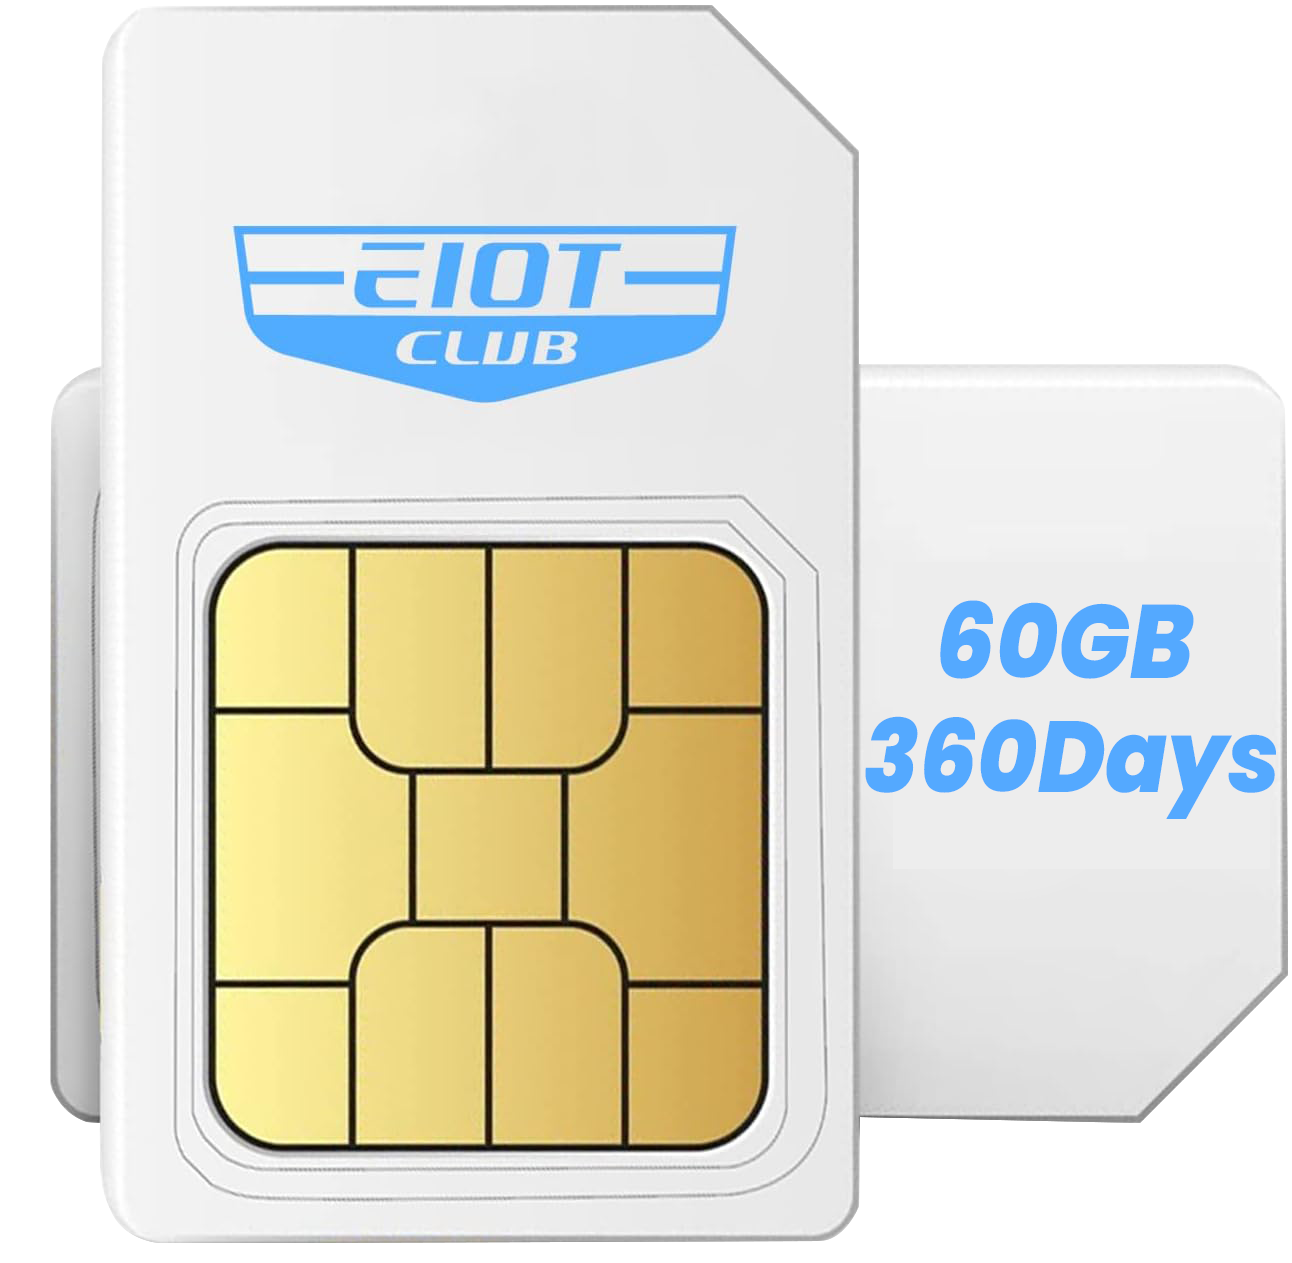 UBox EIOTCLUB SIM card data - 12 month 60GB